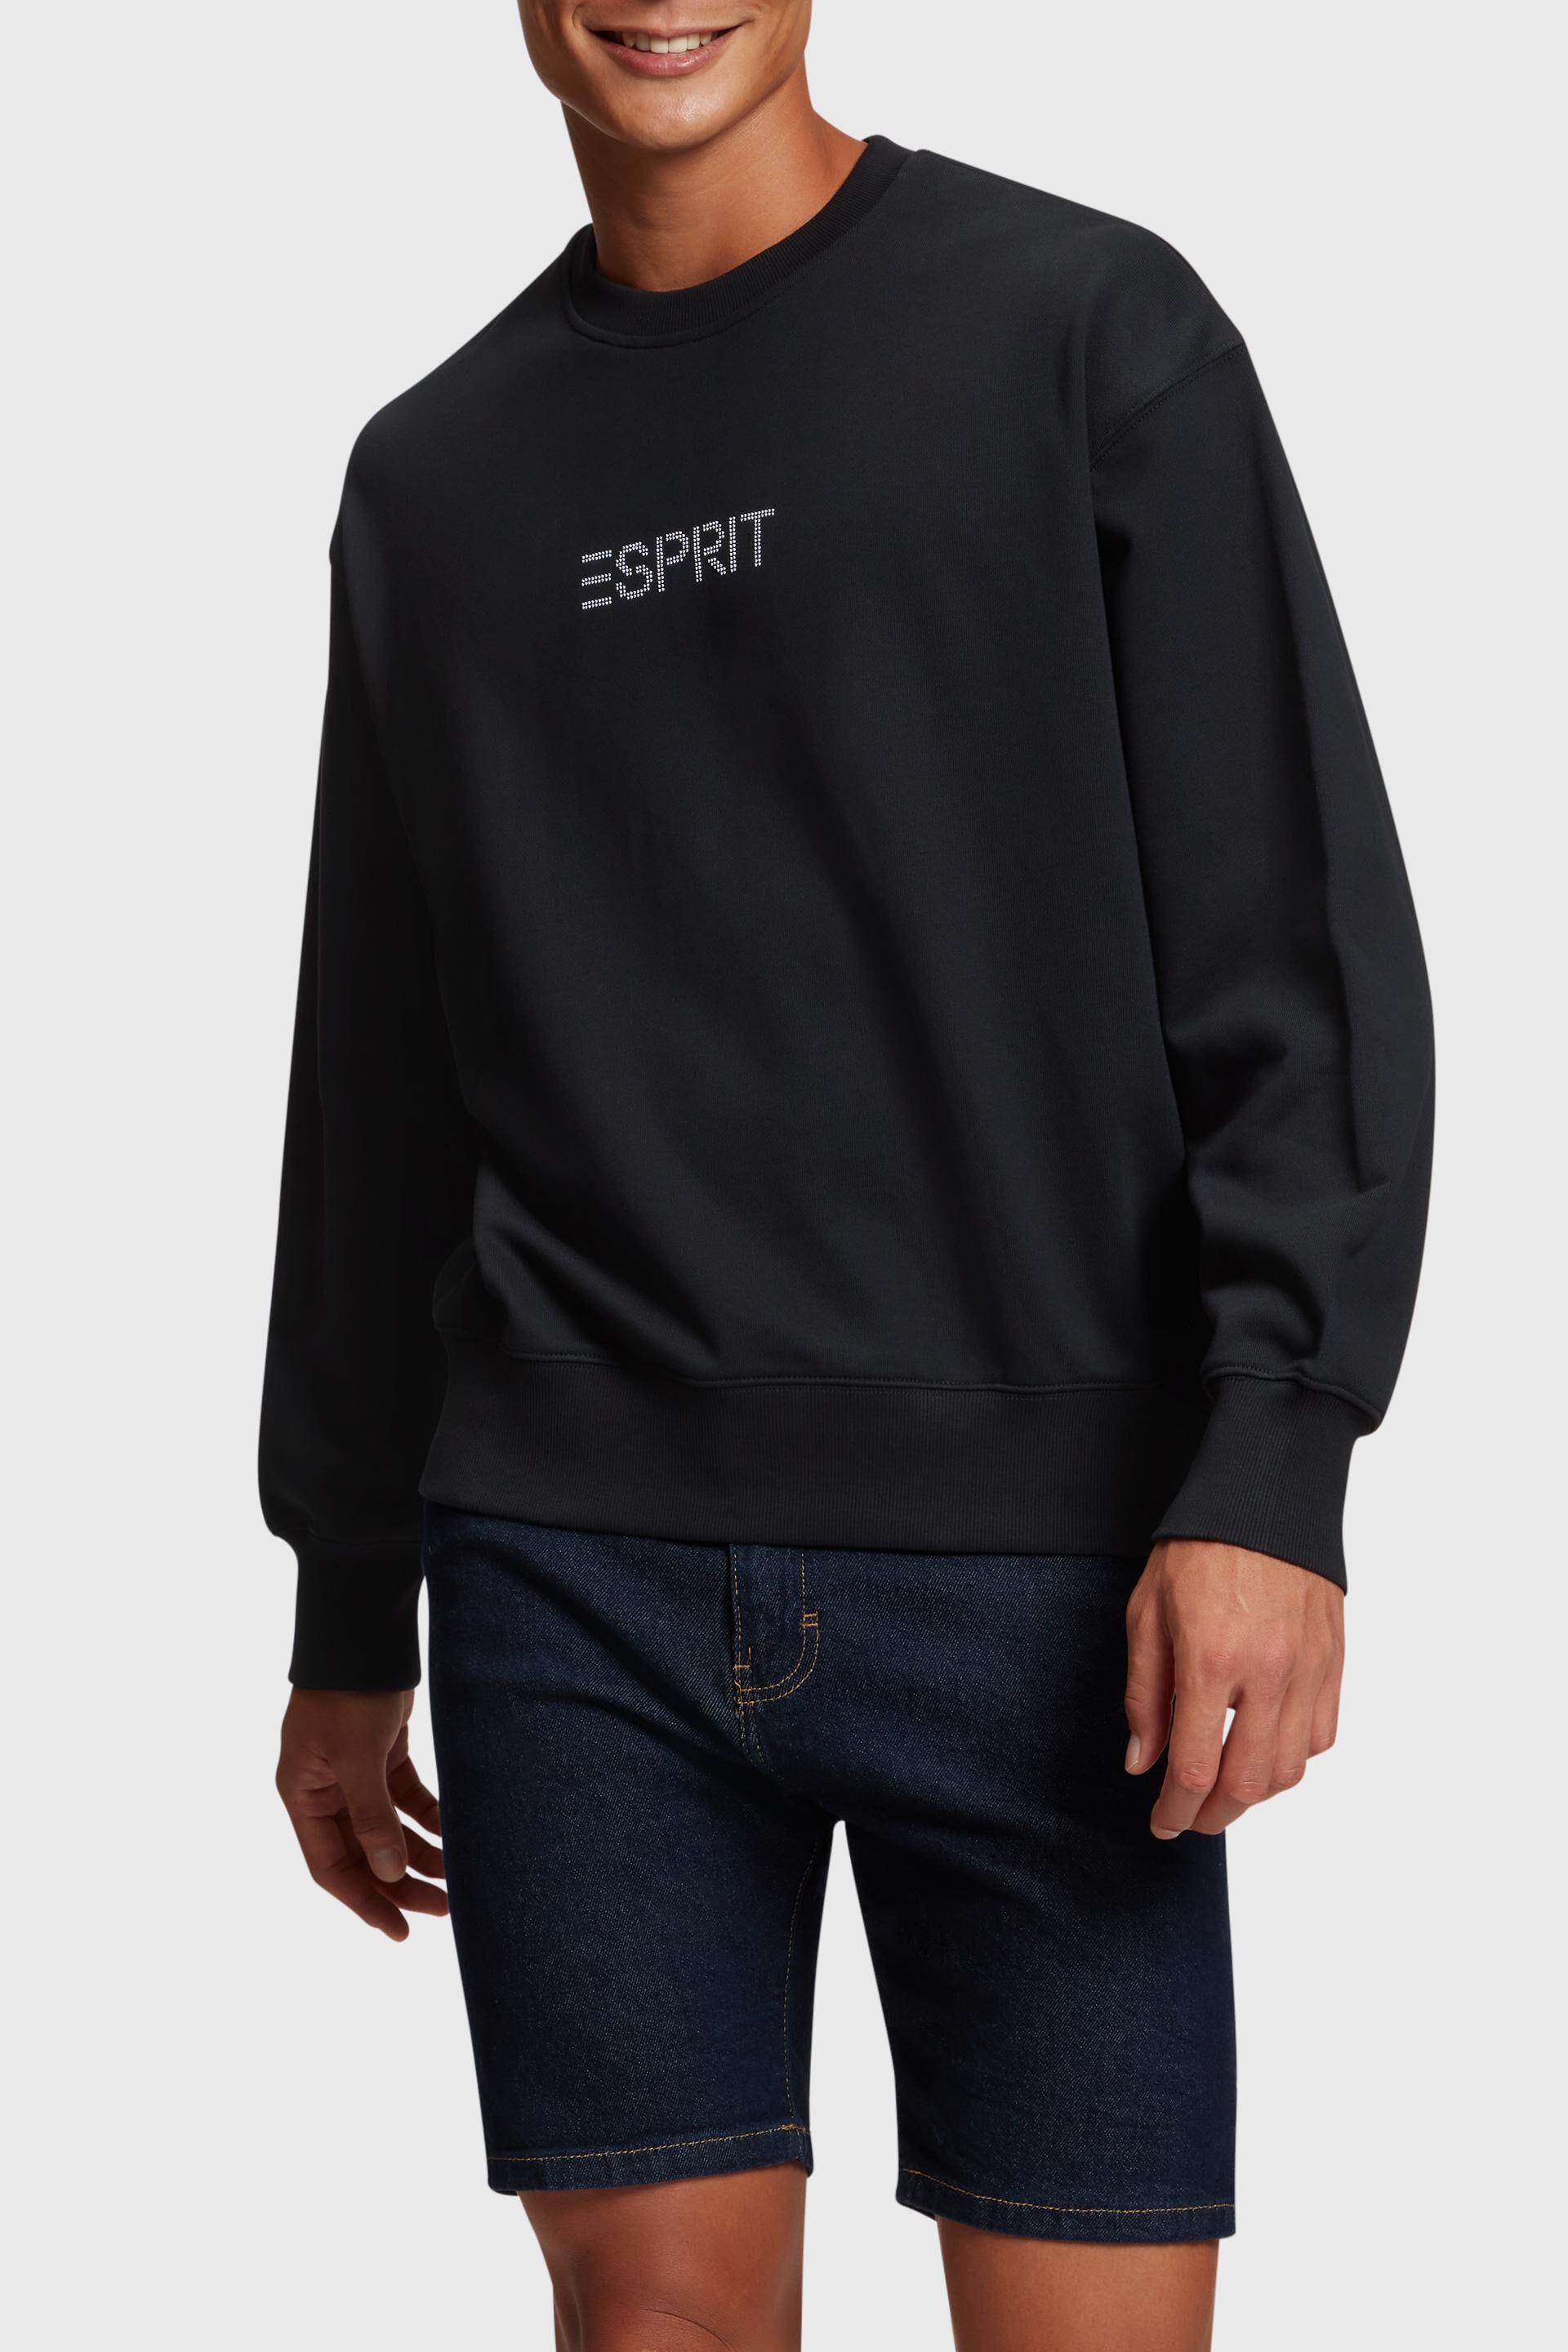 Esprit applique sweatshirt Stud logo